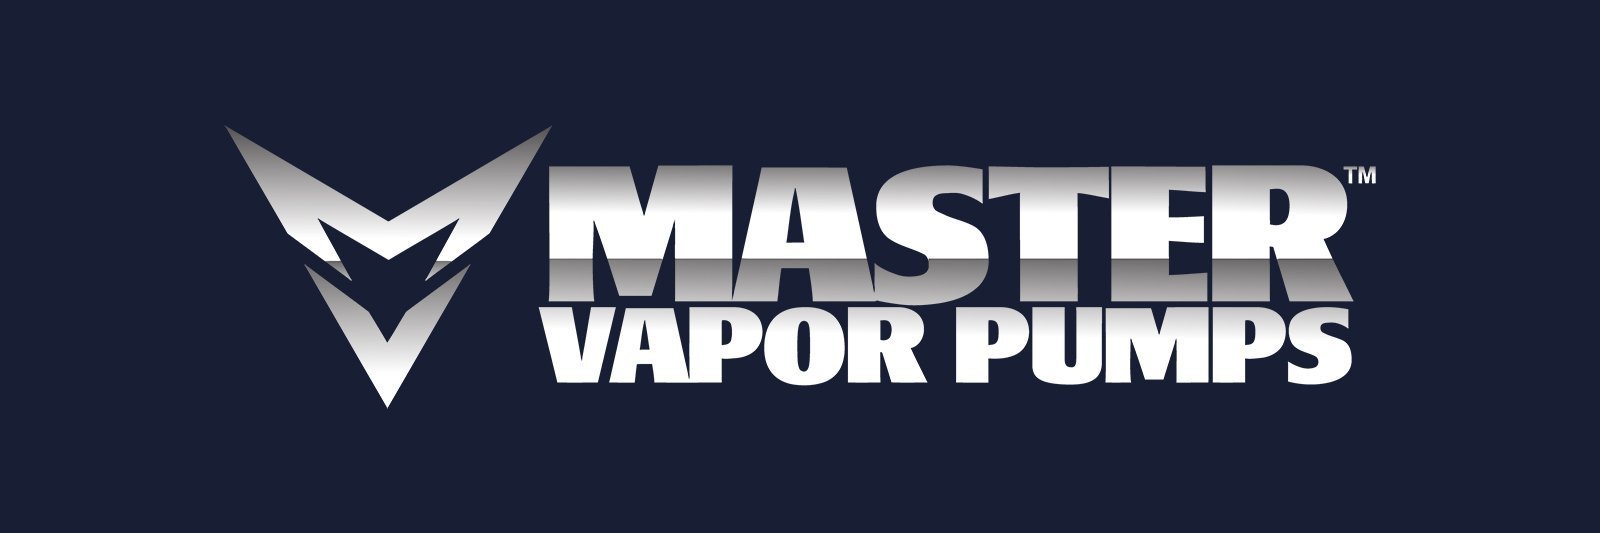 Master Vapor Pumps, Pump Part - MVP - Liquid - Gear Reducer